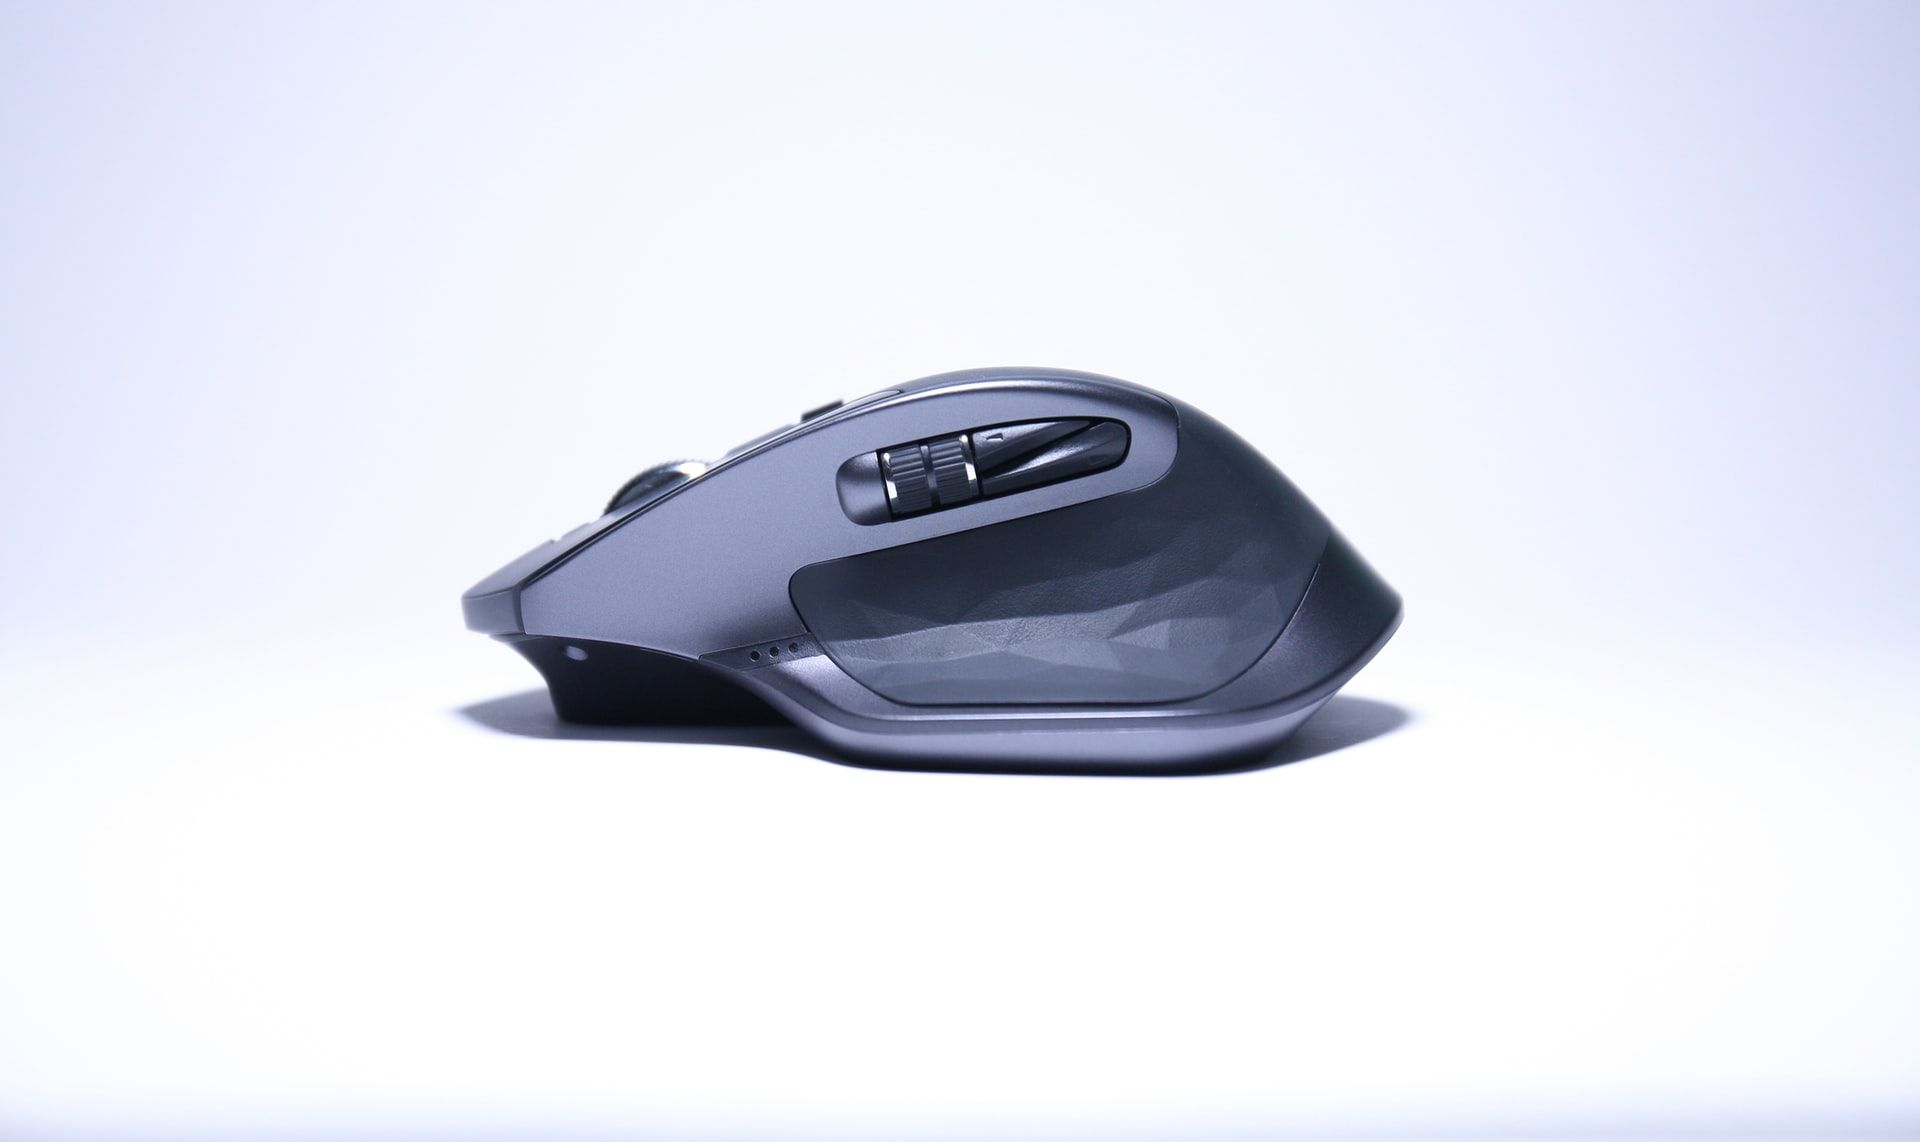 logitech mx master 2s wireless mouse against white background battery indicator lights on side